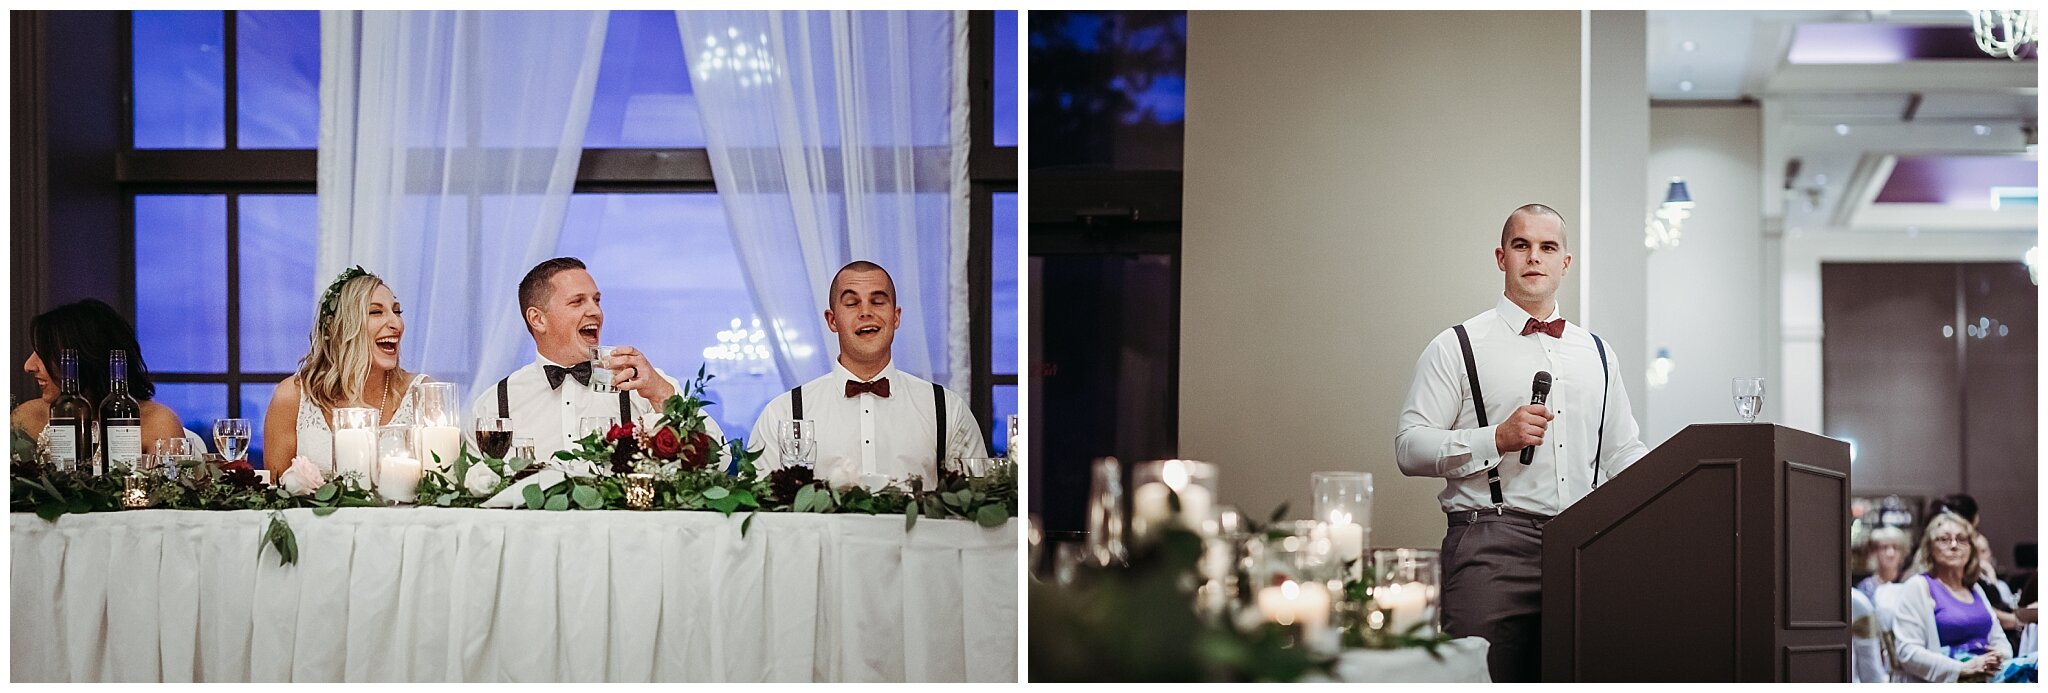 Swaneset+Wedding+Reception